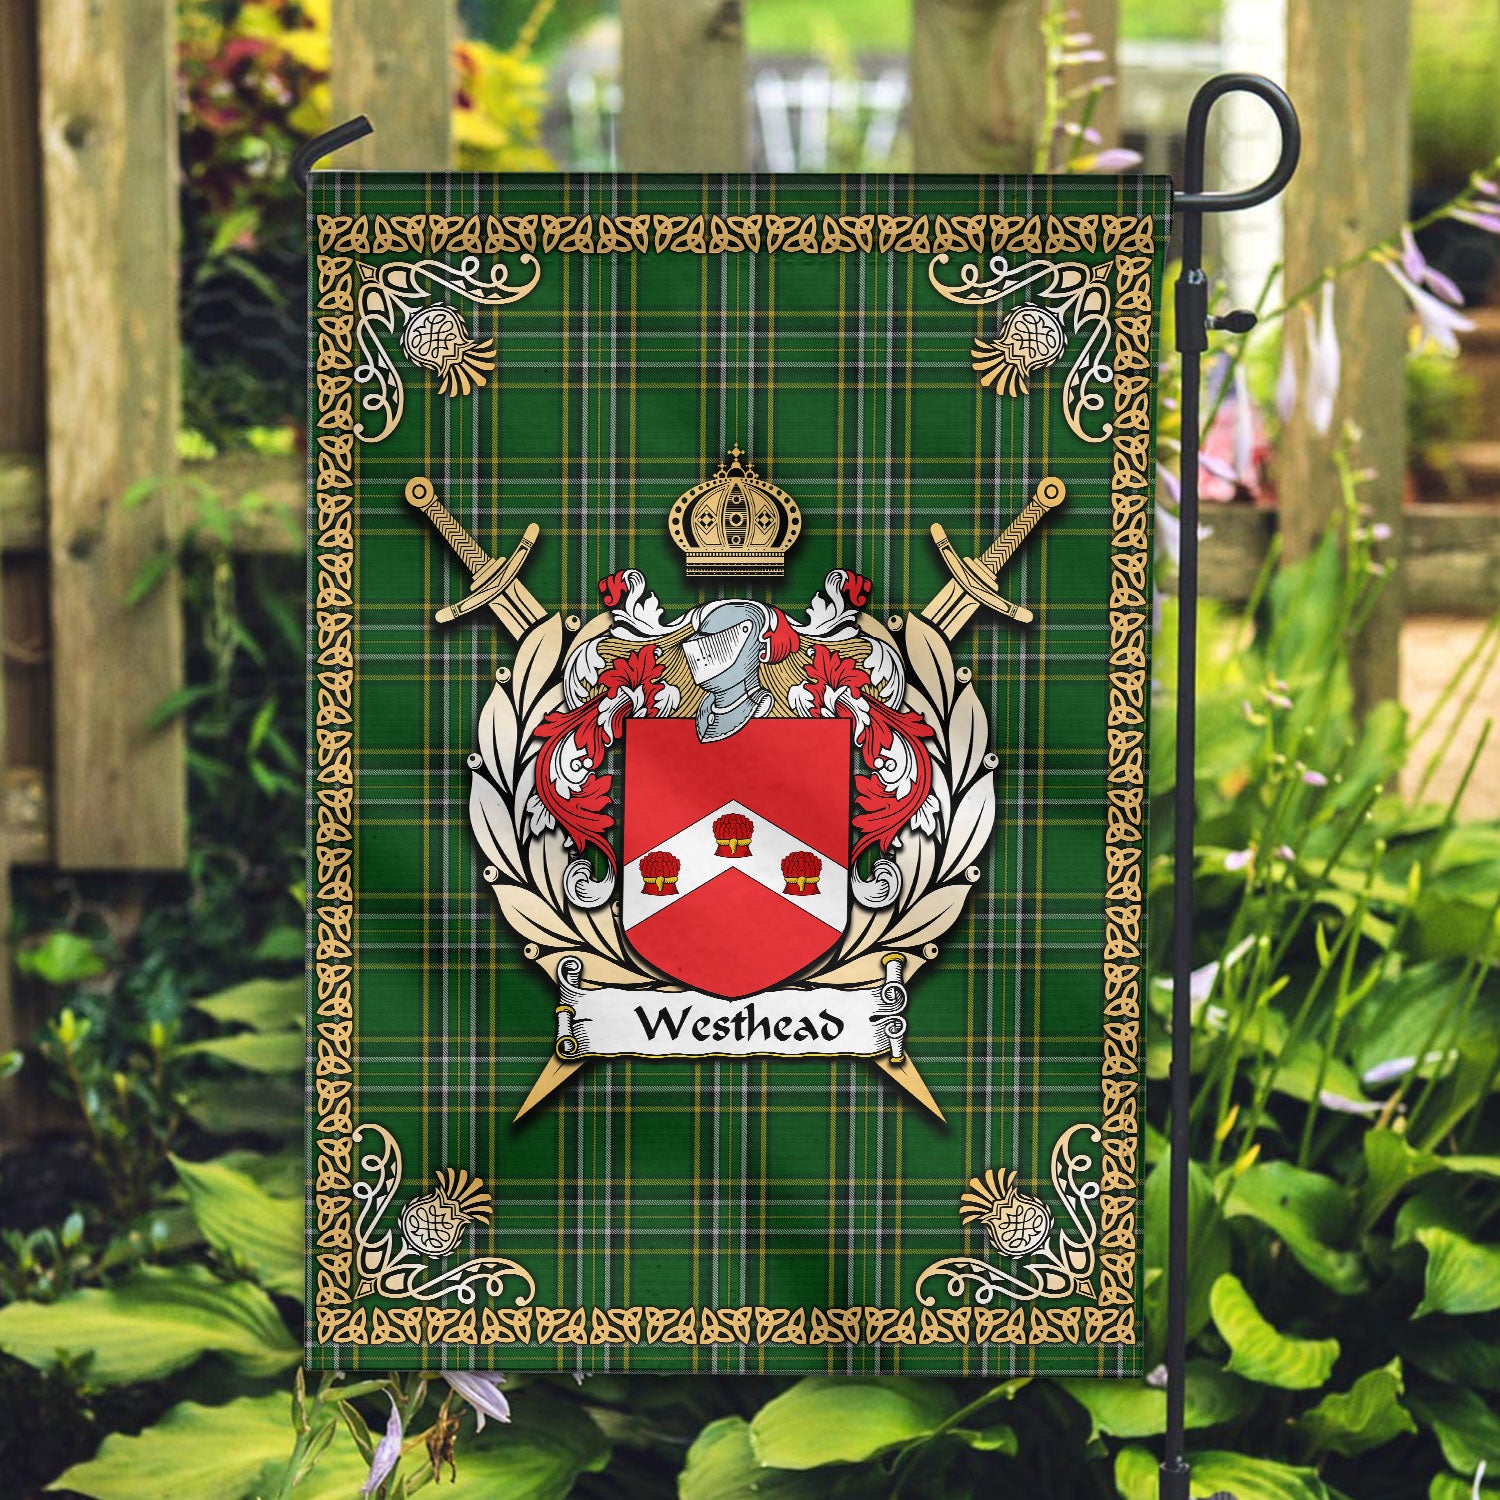 Westhead Tartan Crest Garden Flag - Celtic Thistle Style